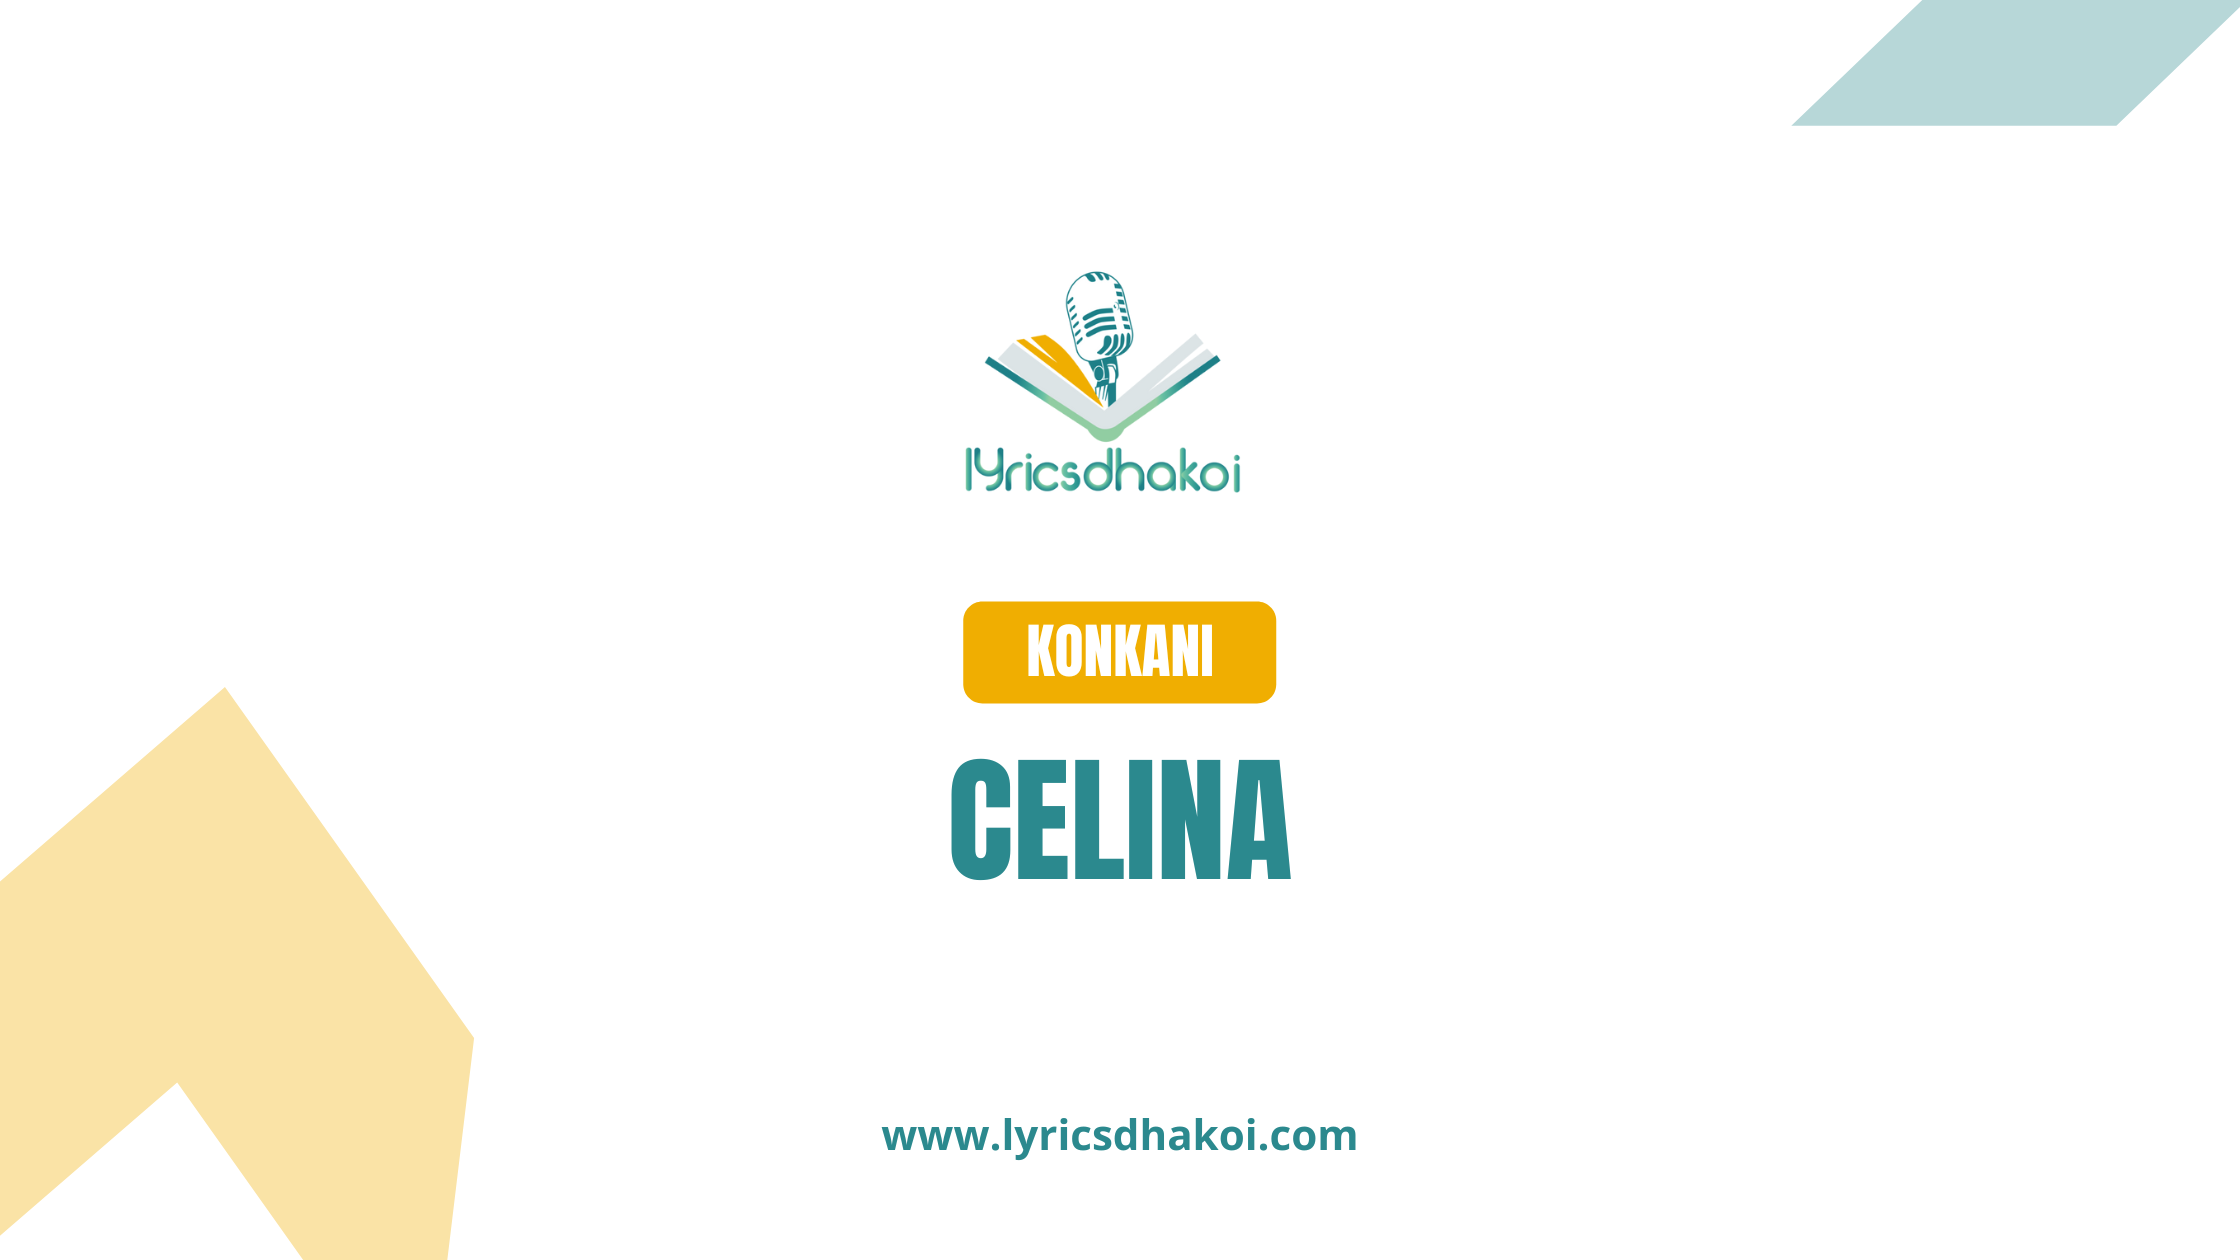 Celina Konkani Lyrics for Karaoke Online - LyricsDhakoi.com